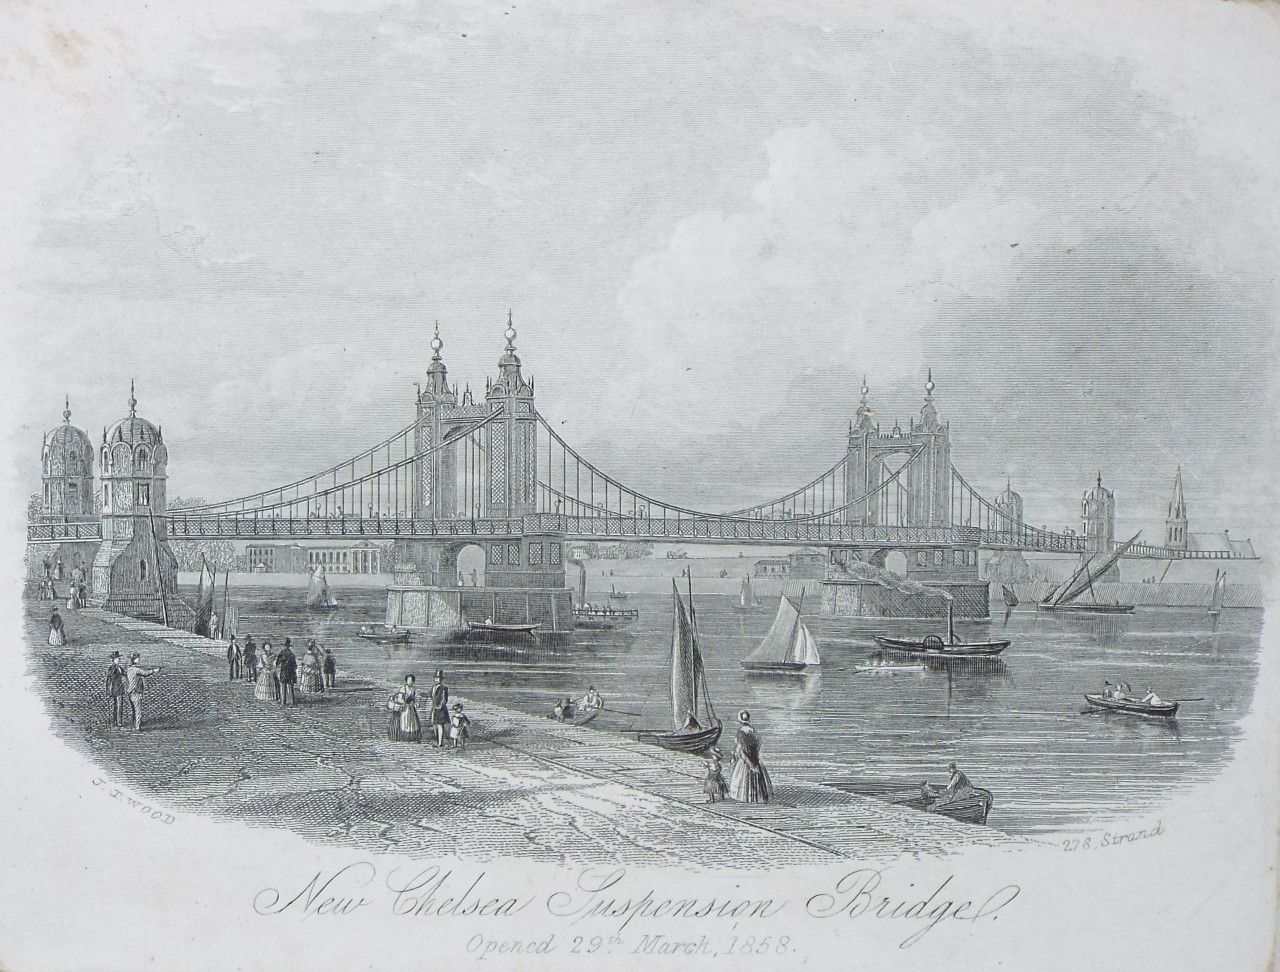 Steel Vignette - New Chelsea Suspension Bridge. Opened 29th March, 1858.